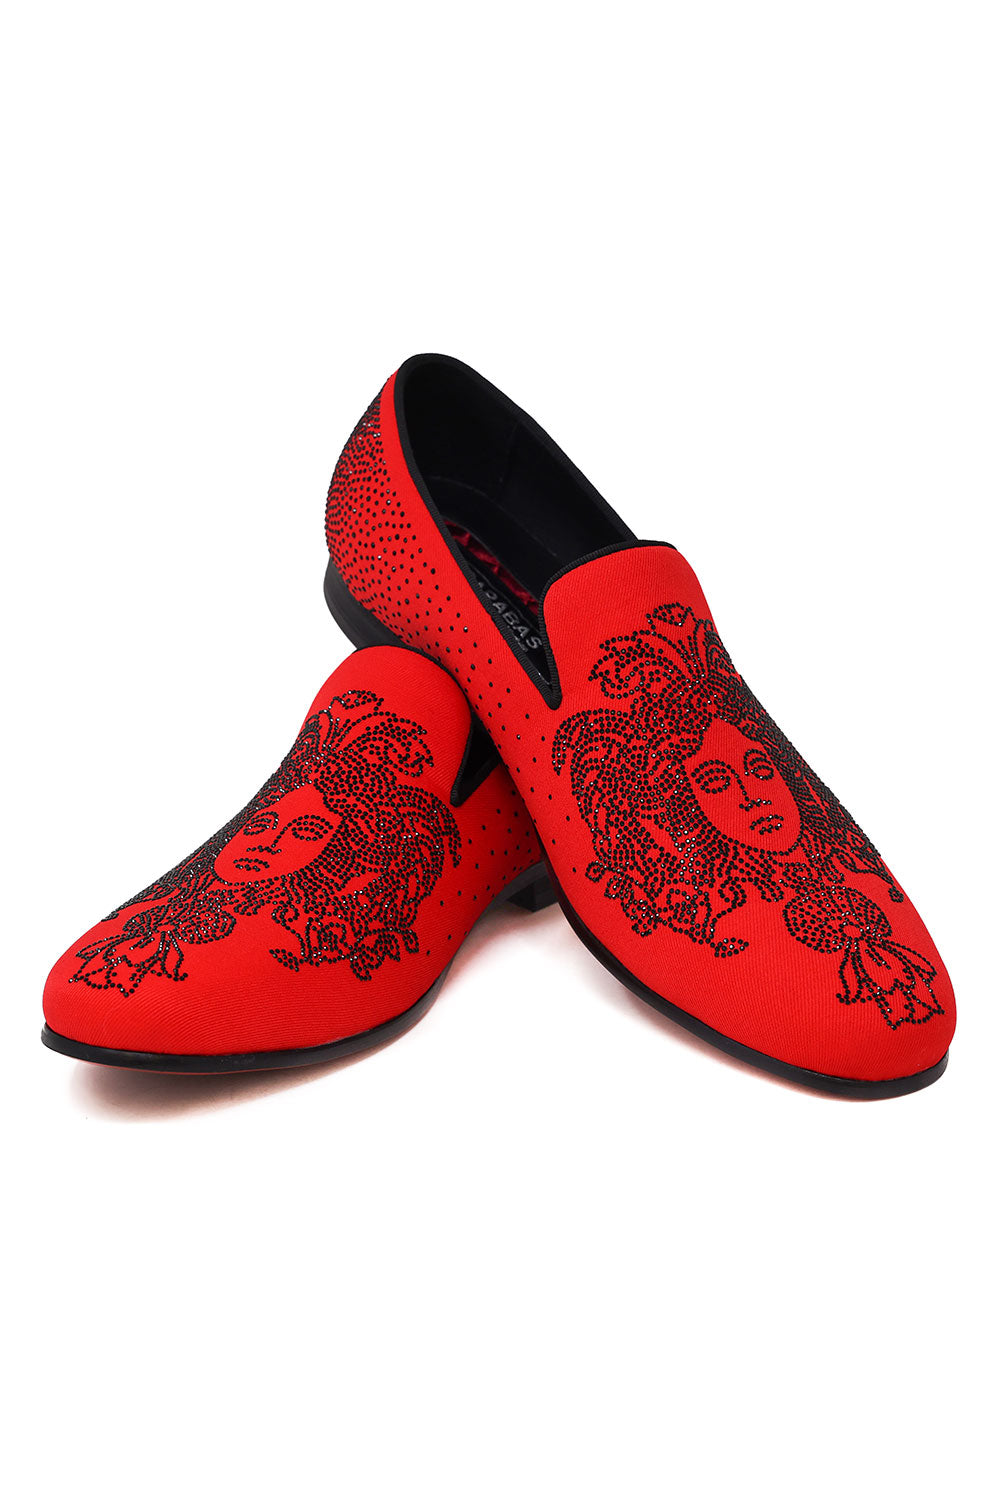 BARABAS Men's Medusa Rhinestone Jewels Slip On Dress Shoes 2SHR12 Red